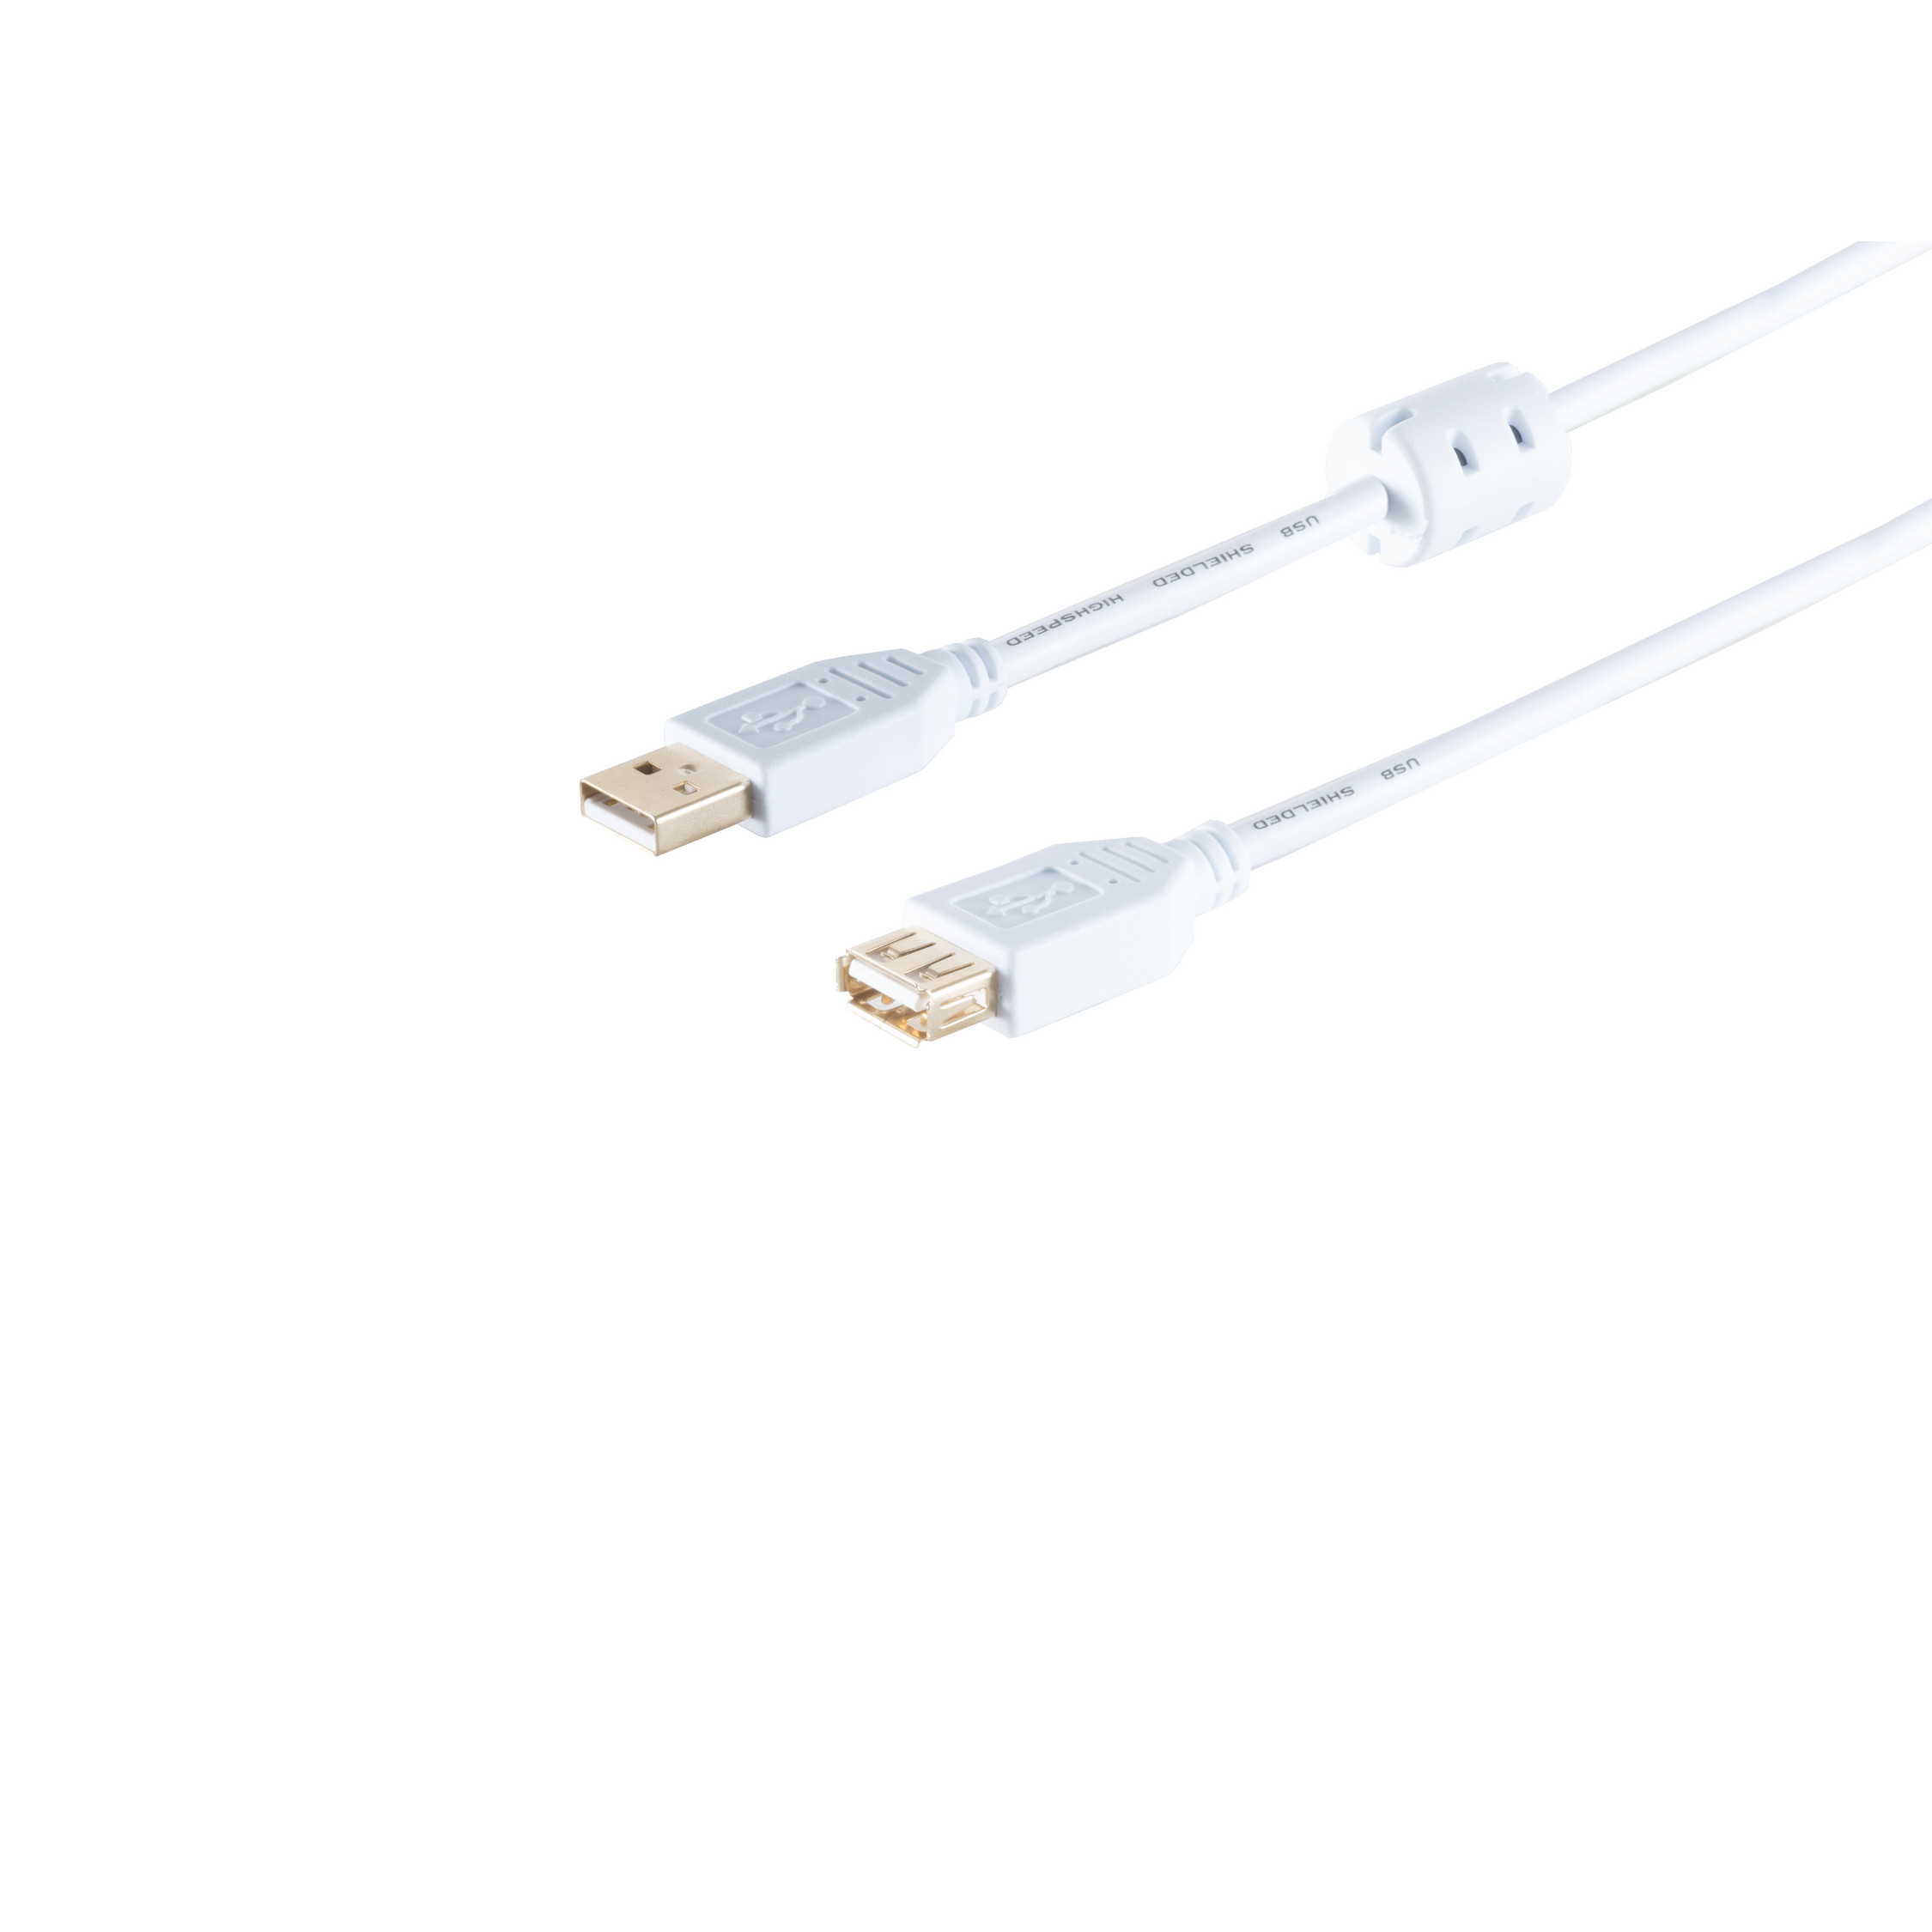 S/CONN MAXIMUM CONNECTIVITY USB High mit USB 2.0 A/A Buchse Verlängerung, weiß, Speed Ferrit, 1m Kabel